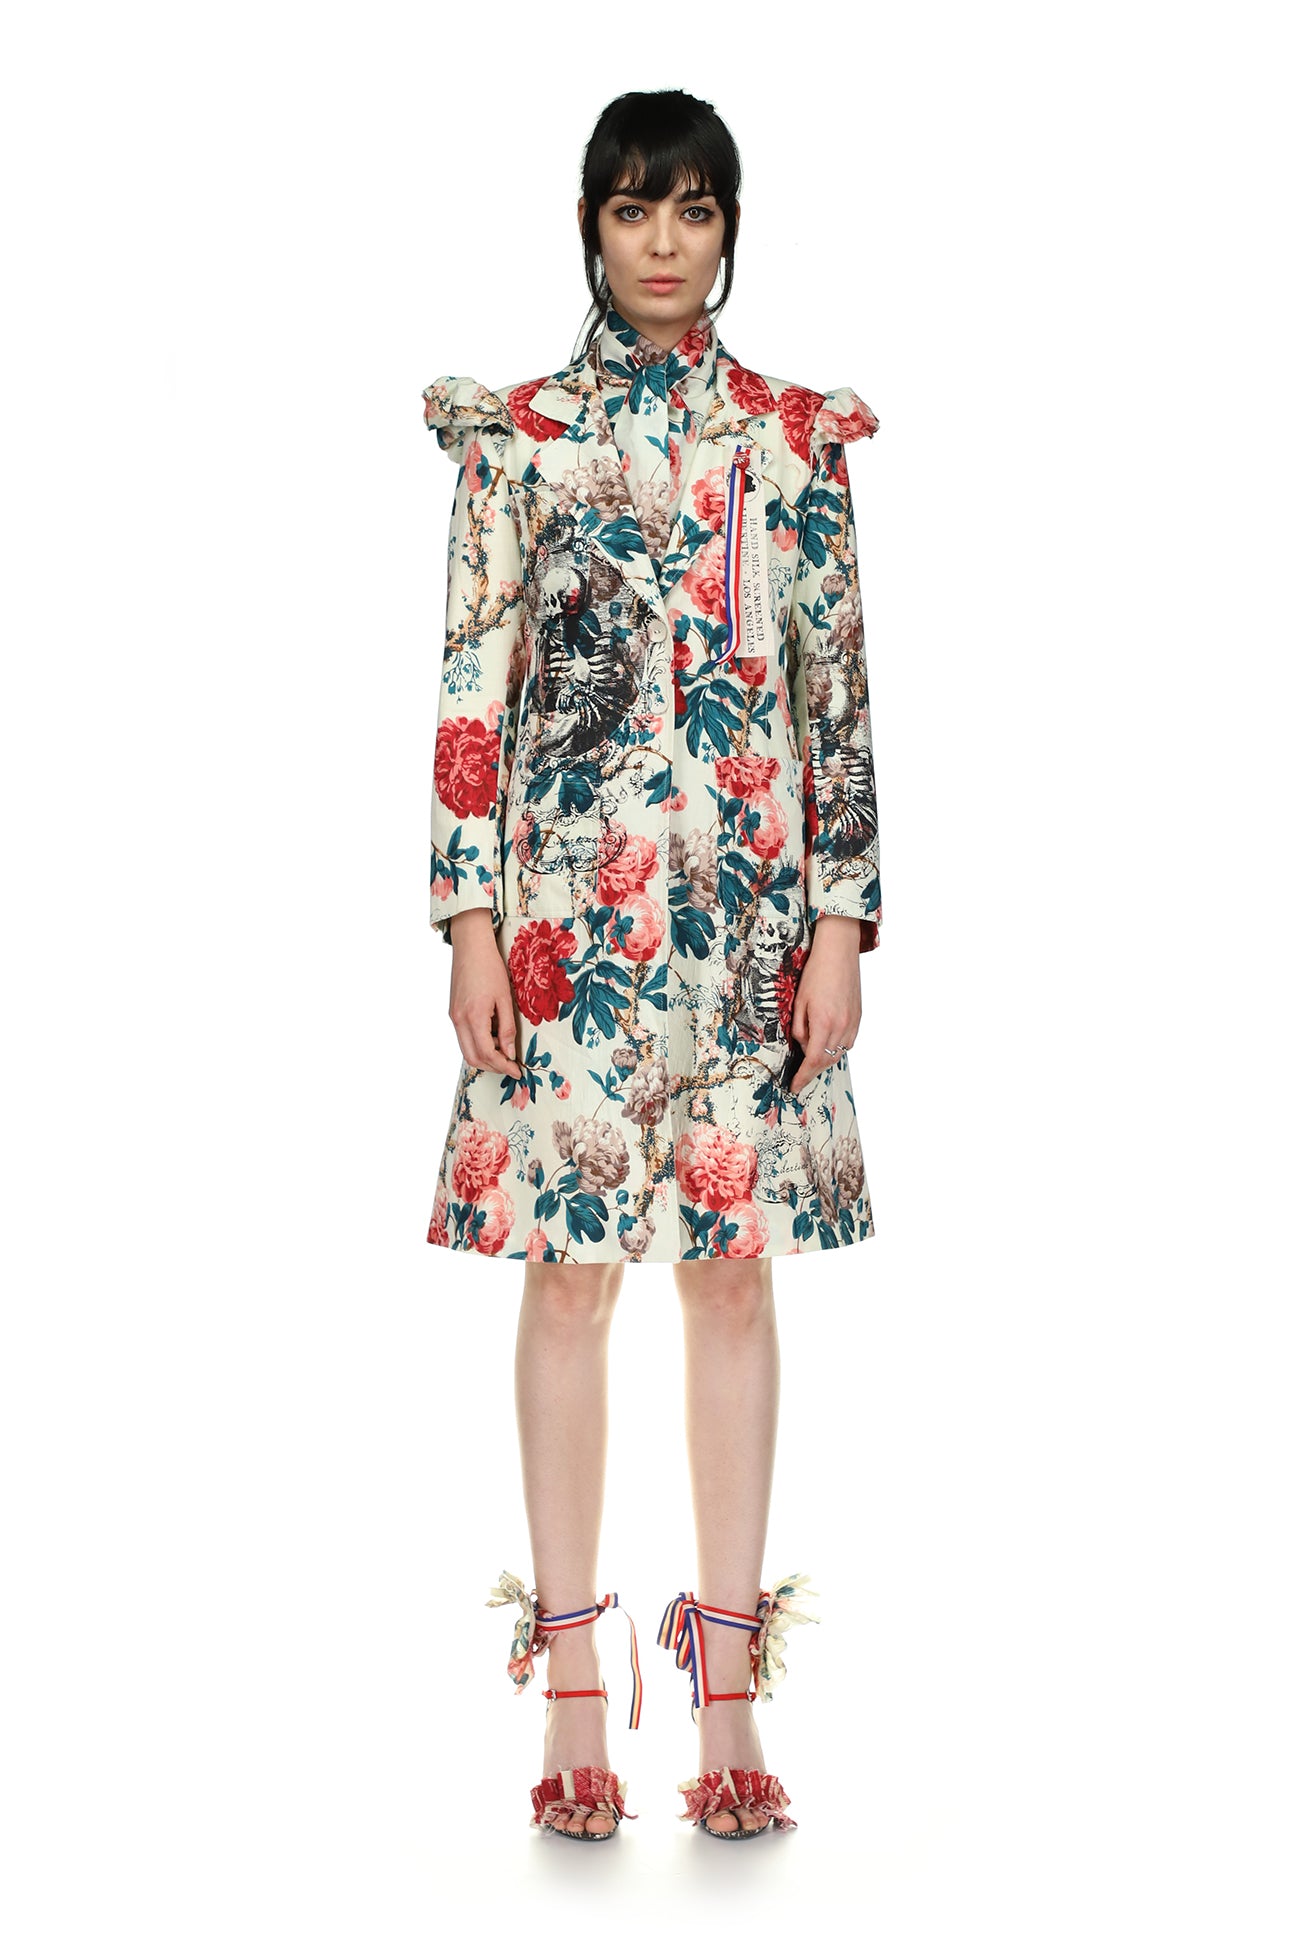 Silk Screen Mélange 'Kandi Floral' Ruffle Cap Coat - Women's Jackets & Coats - Libertine